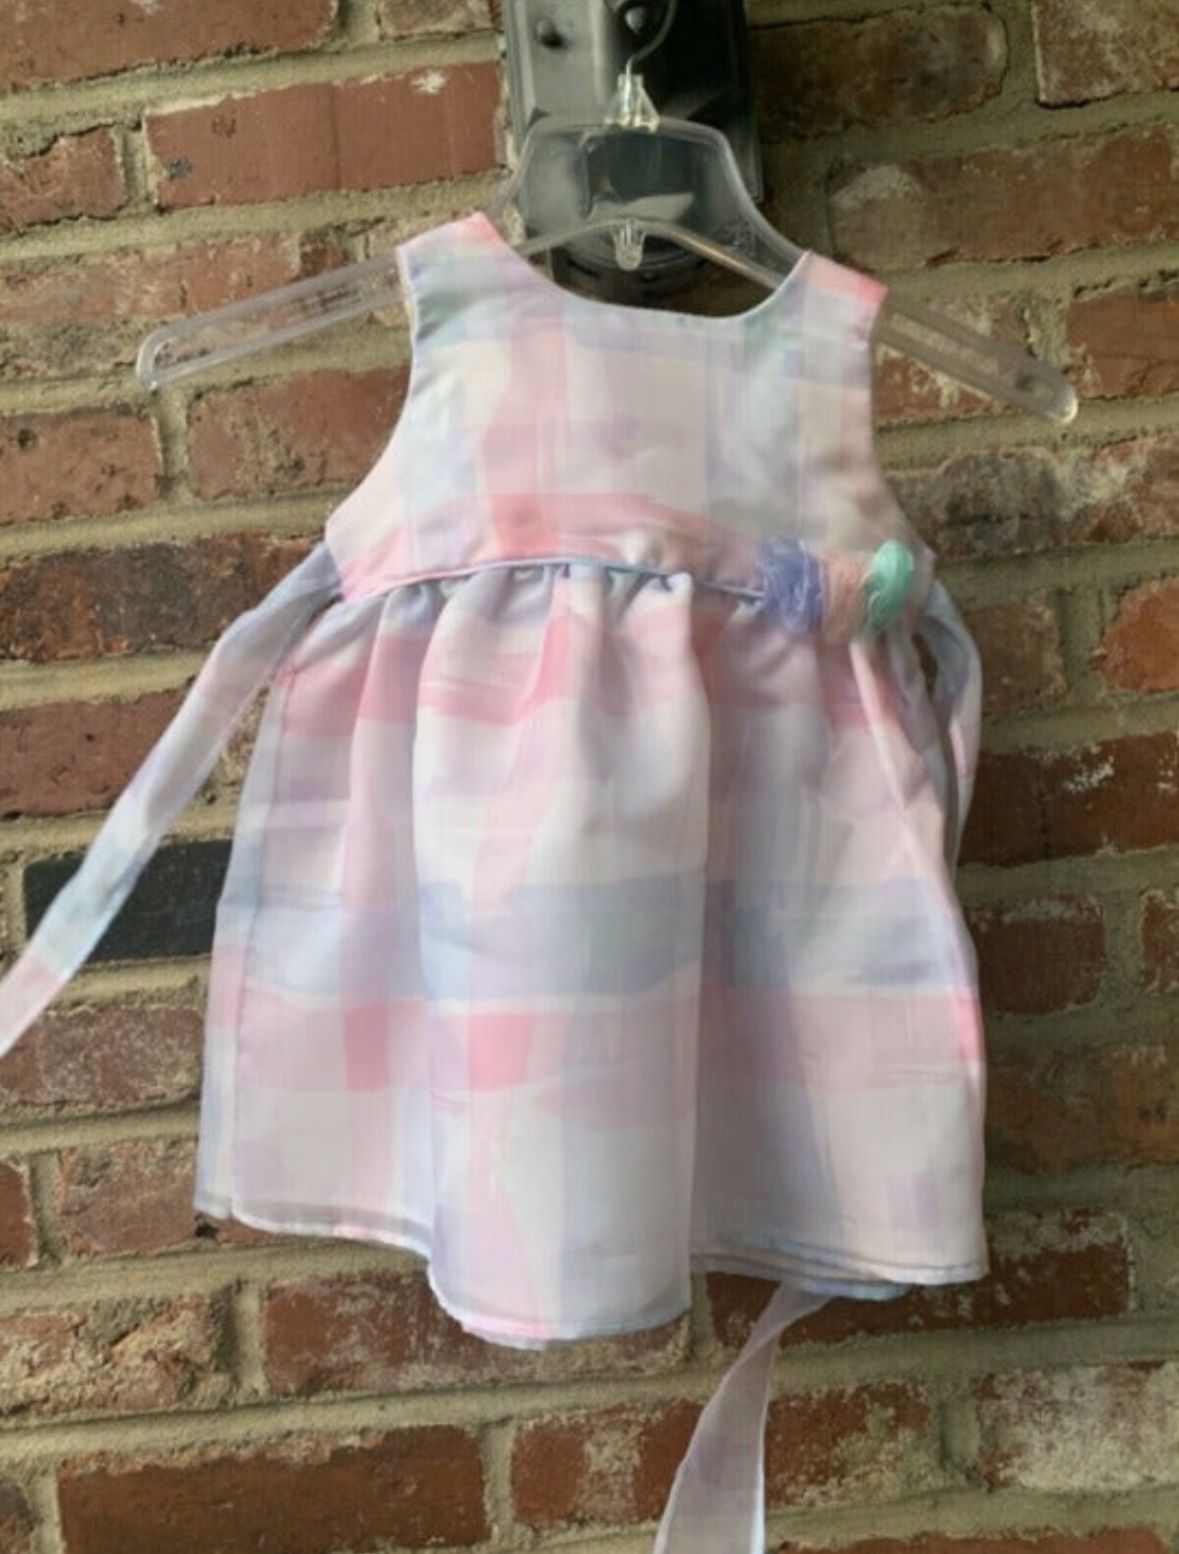  La Princess pale blue, pink Toddler GIRLS Easter / Party dress. Size 12 months